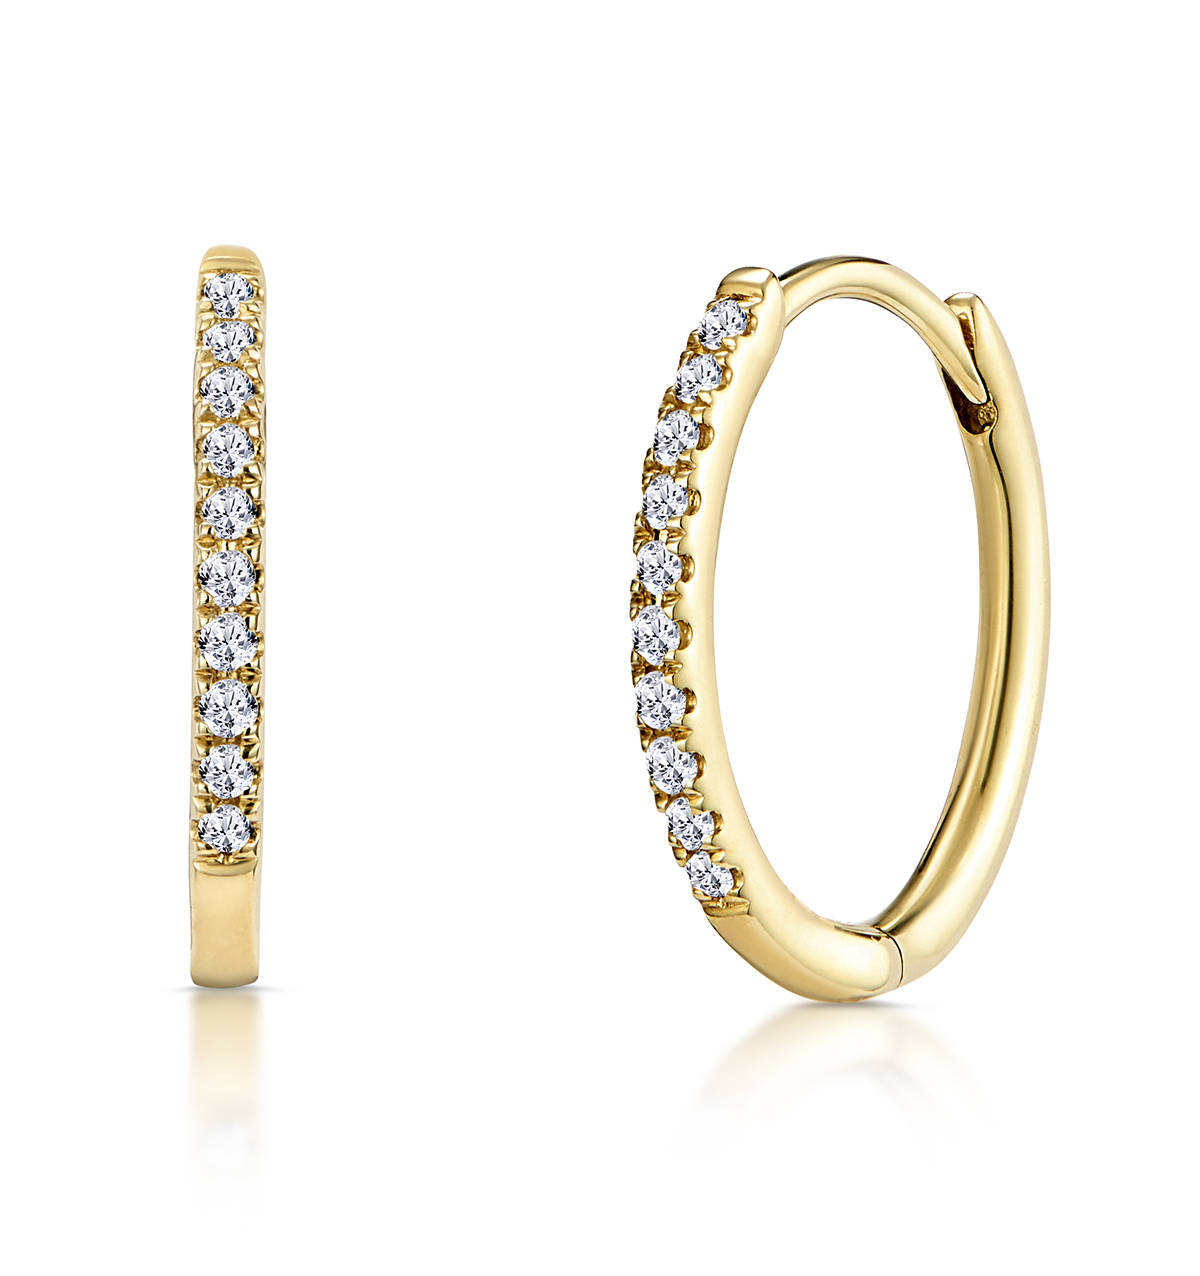 18k  white gold diamond cut hoop earring earrings  3.1  grams 1 1/4 inches #9415 